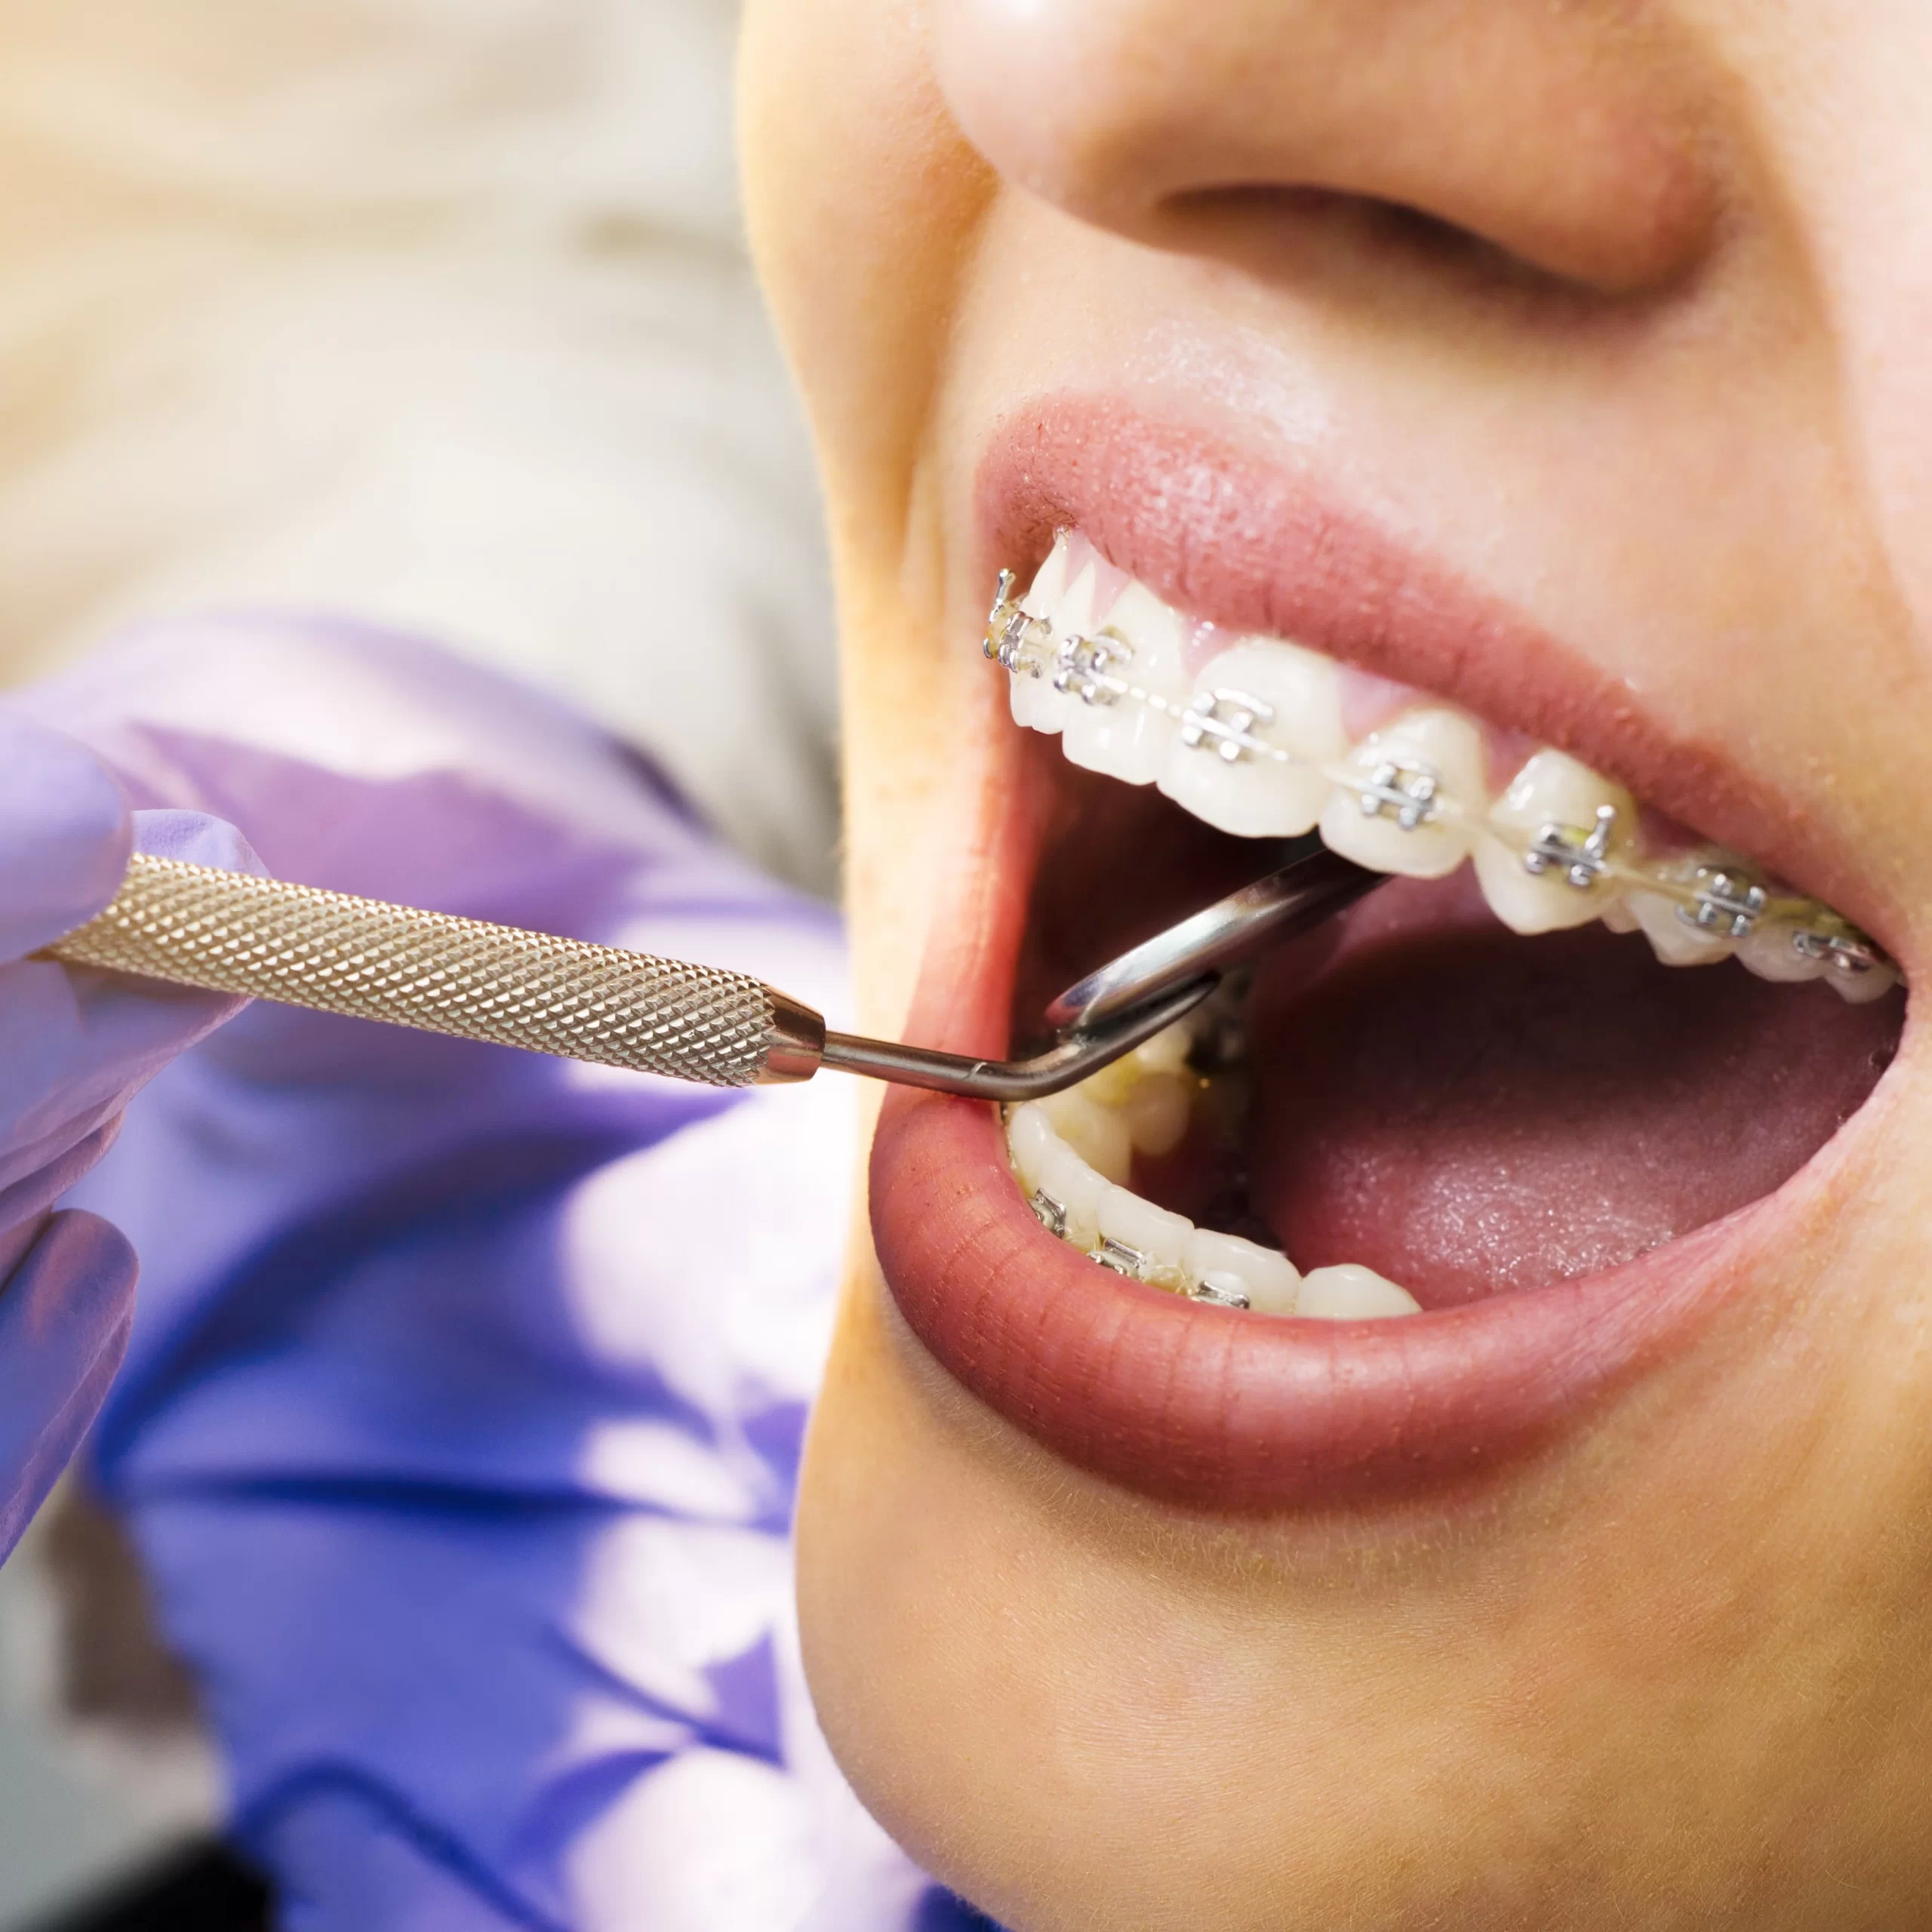 Teeth Treatment